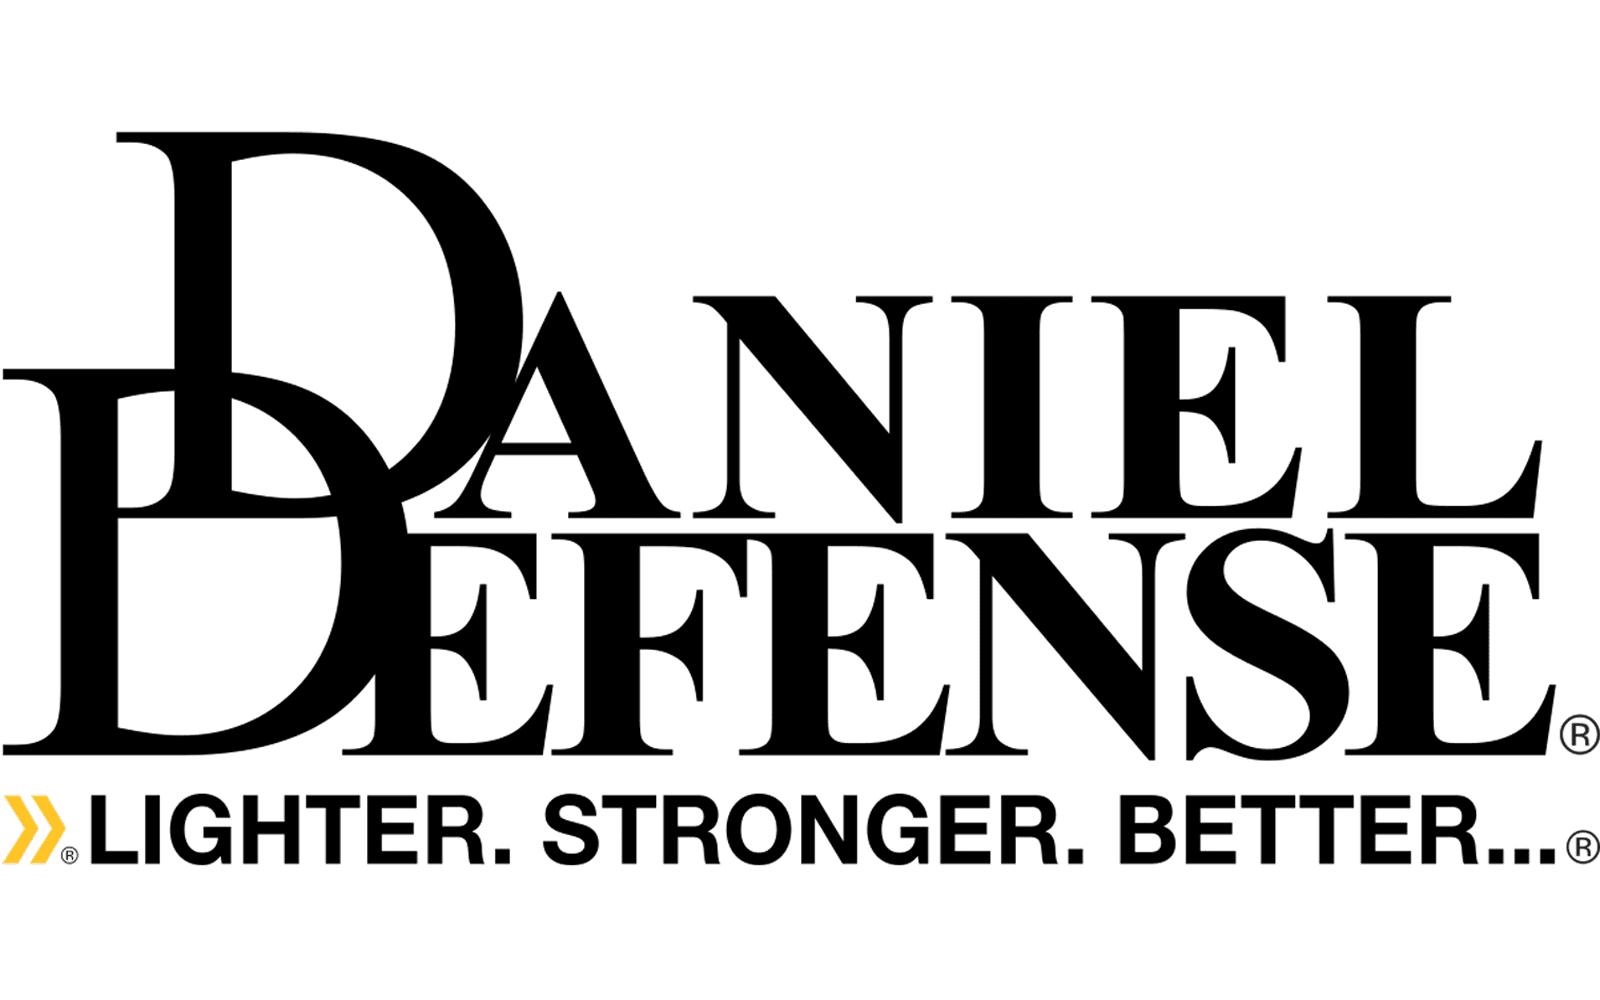 Daniel Defense Logo